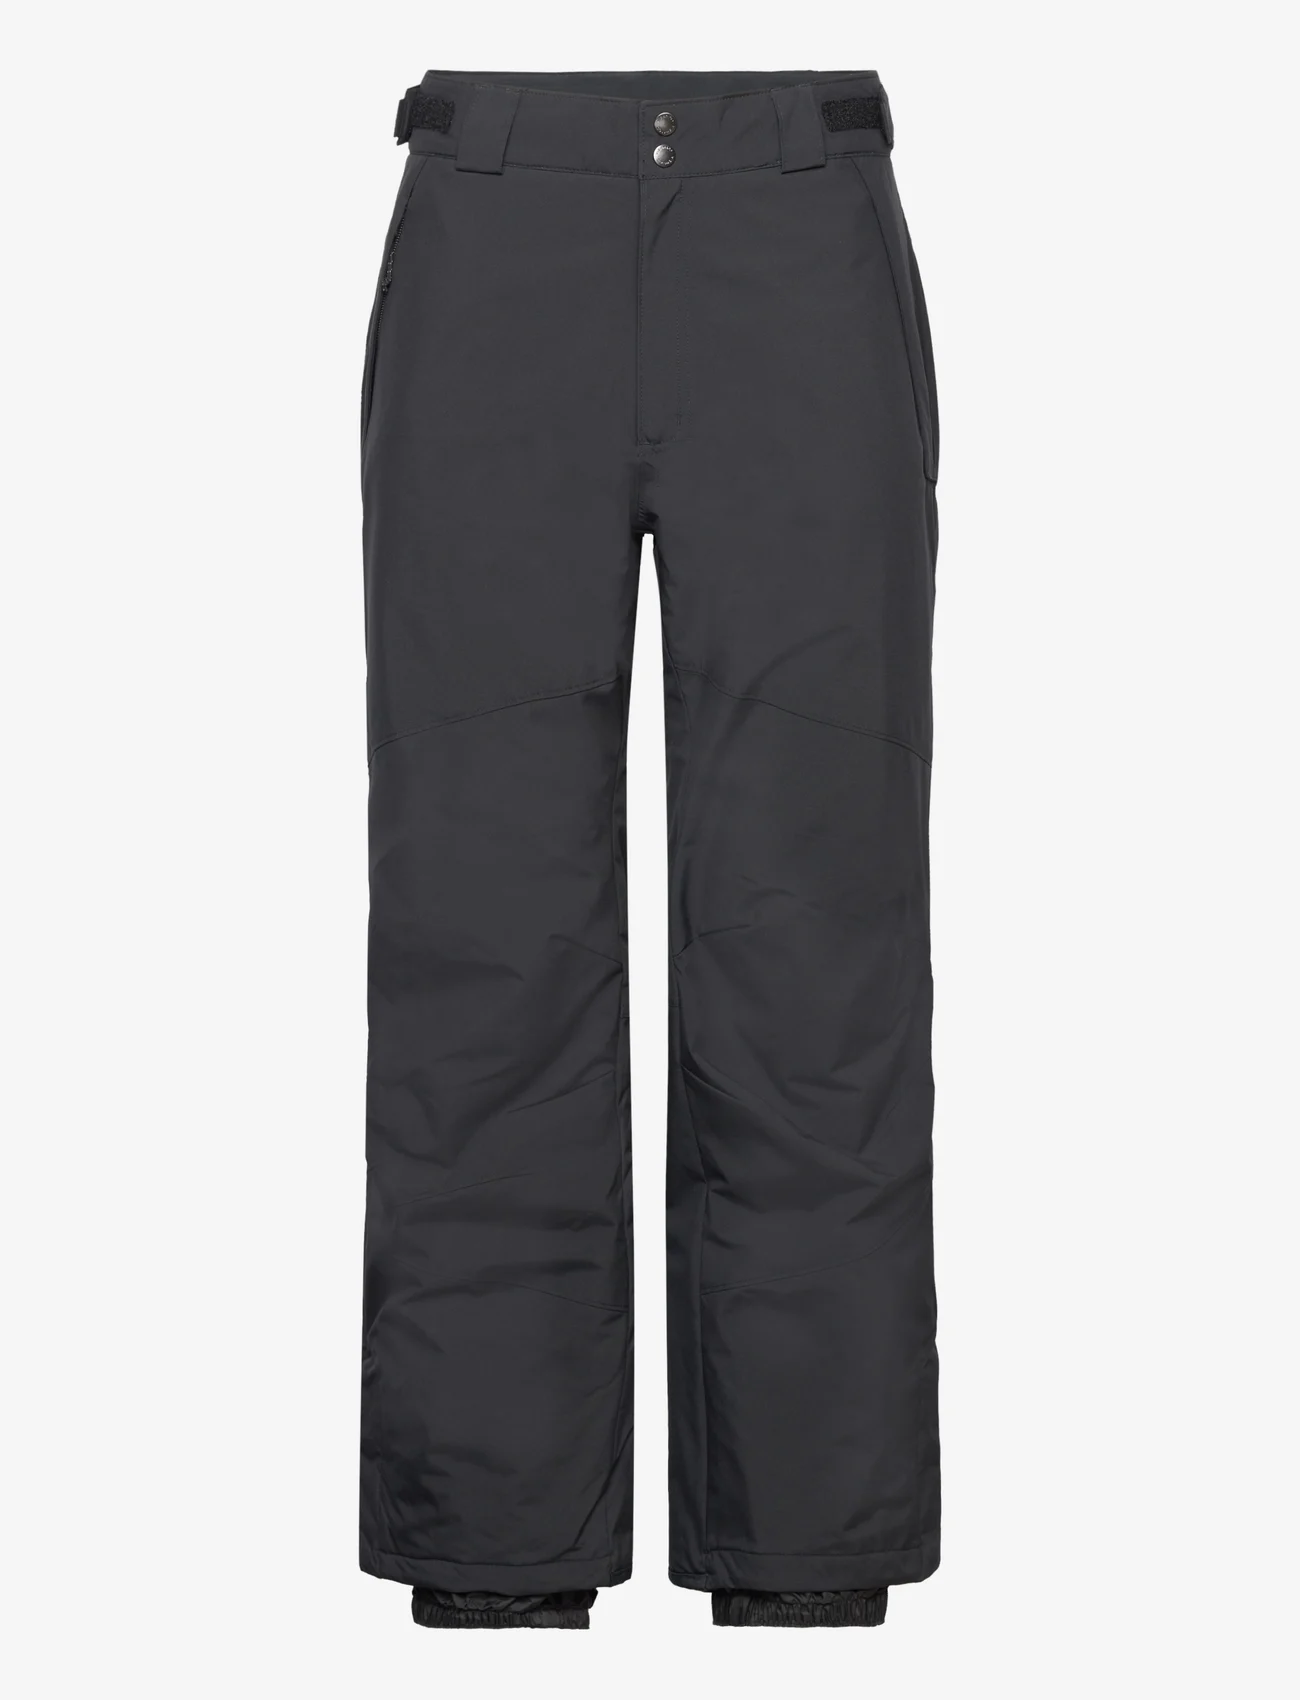 Columbia Sportswear - Shafer Canyon Pant - skiing pants - black - 0